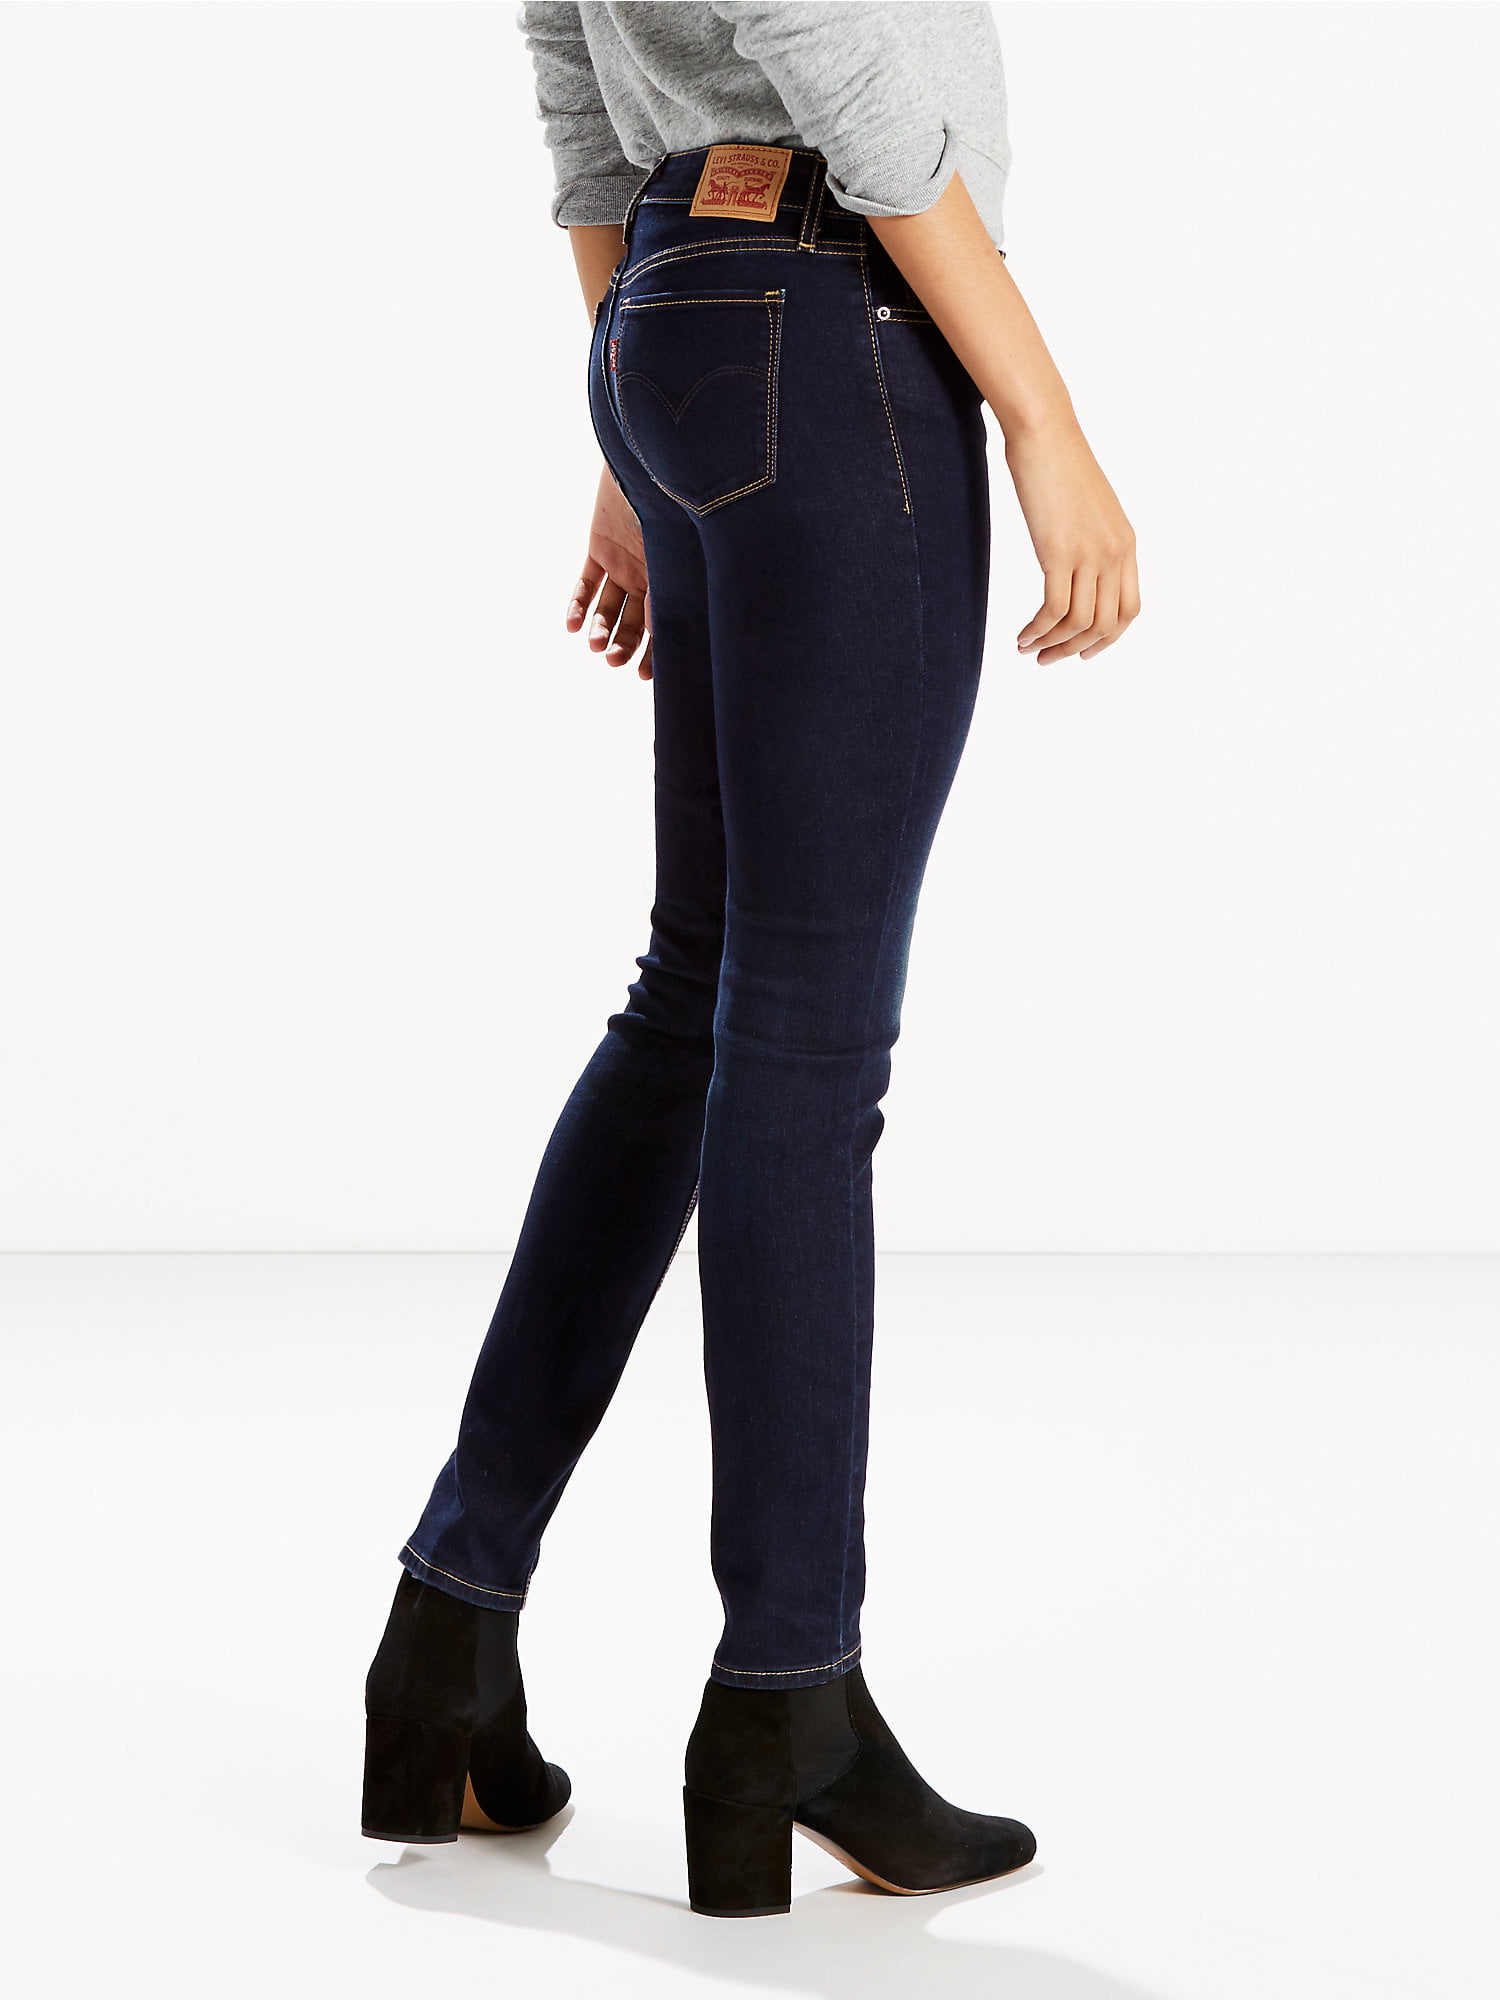 Levi's Women's 711 Skinny Jeans 